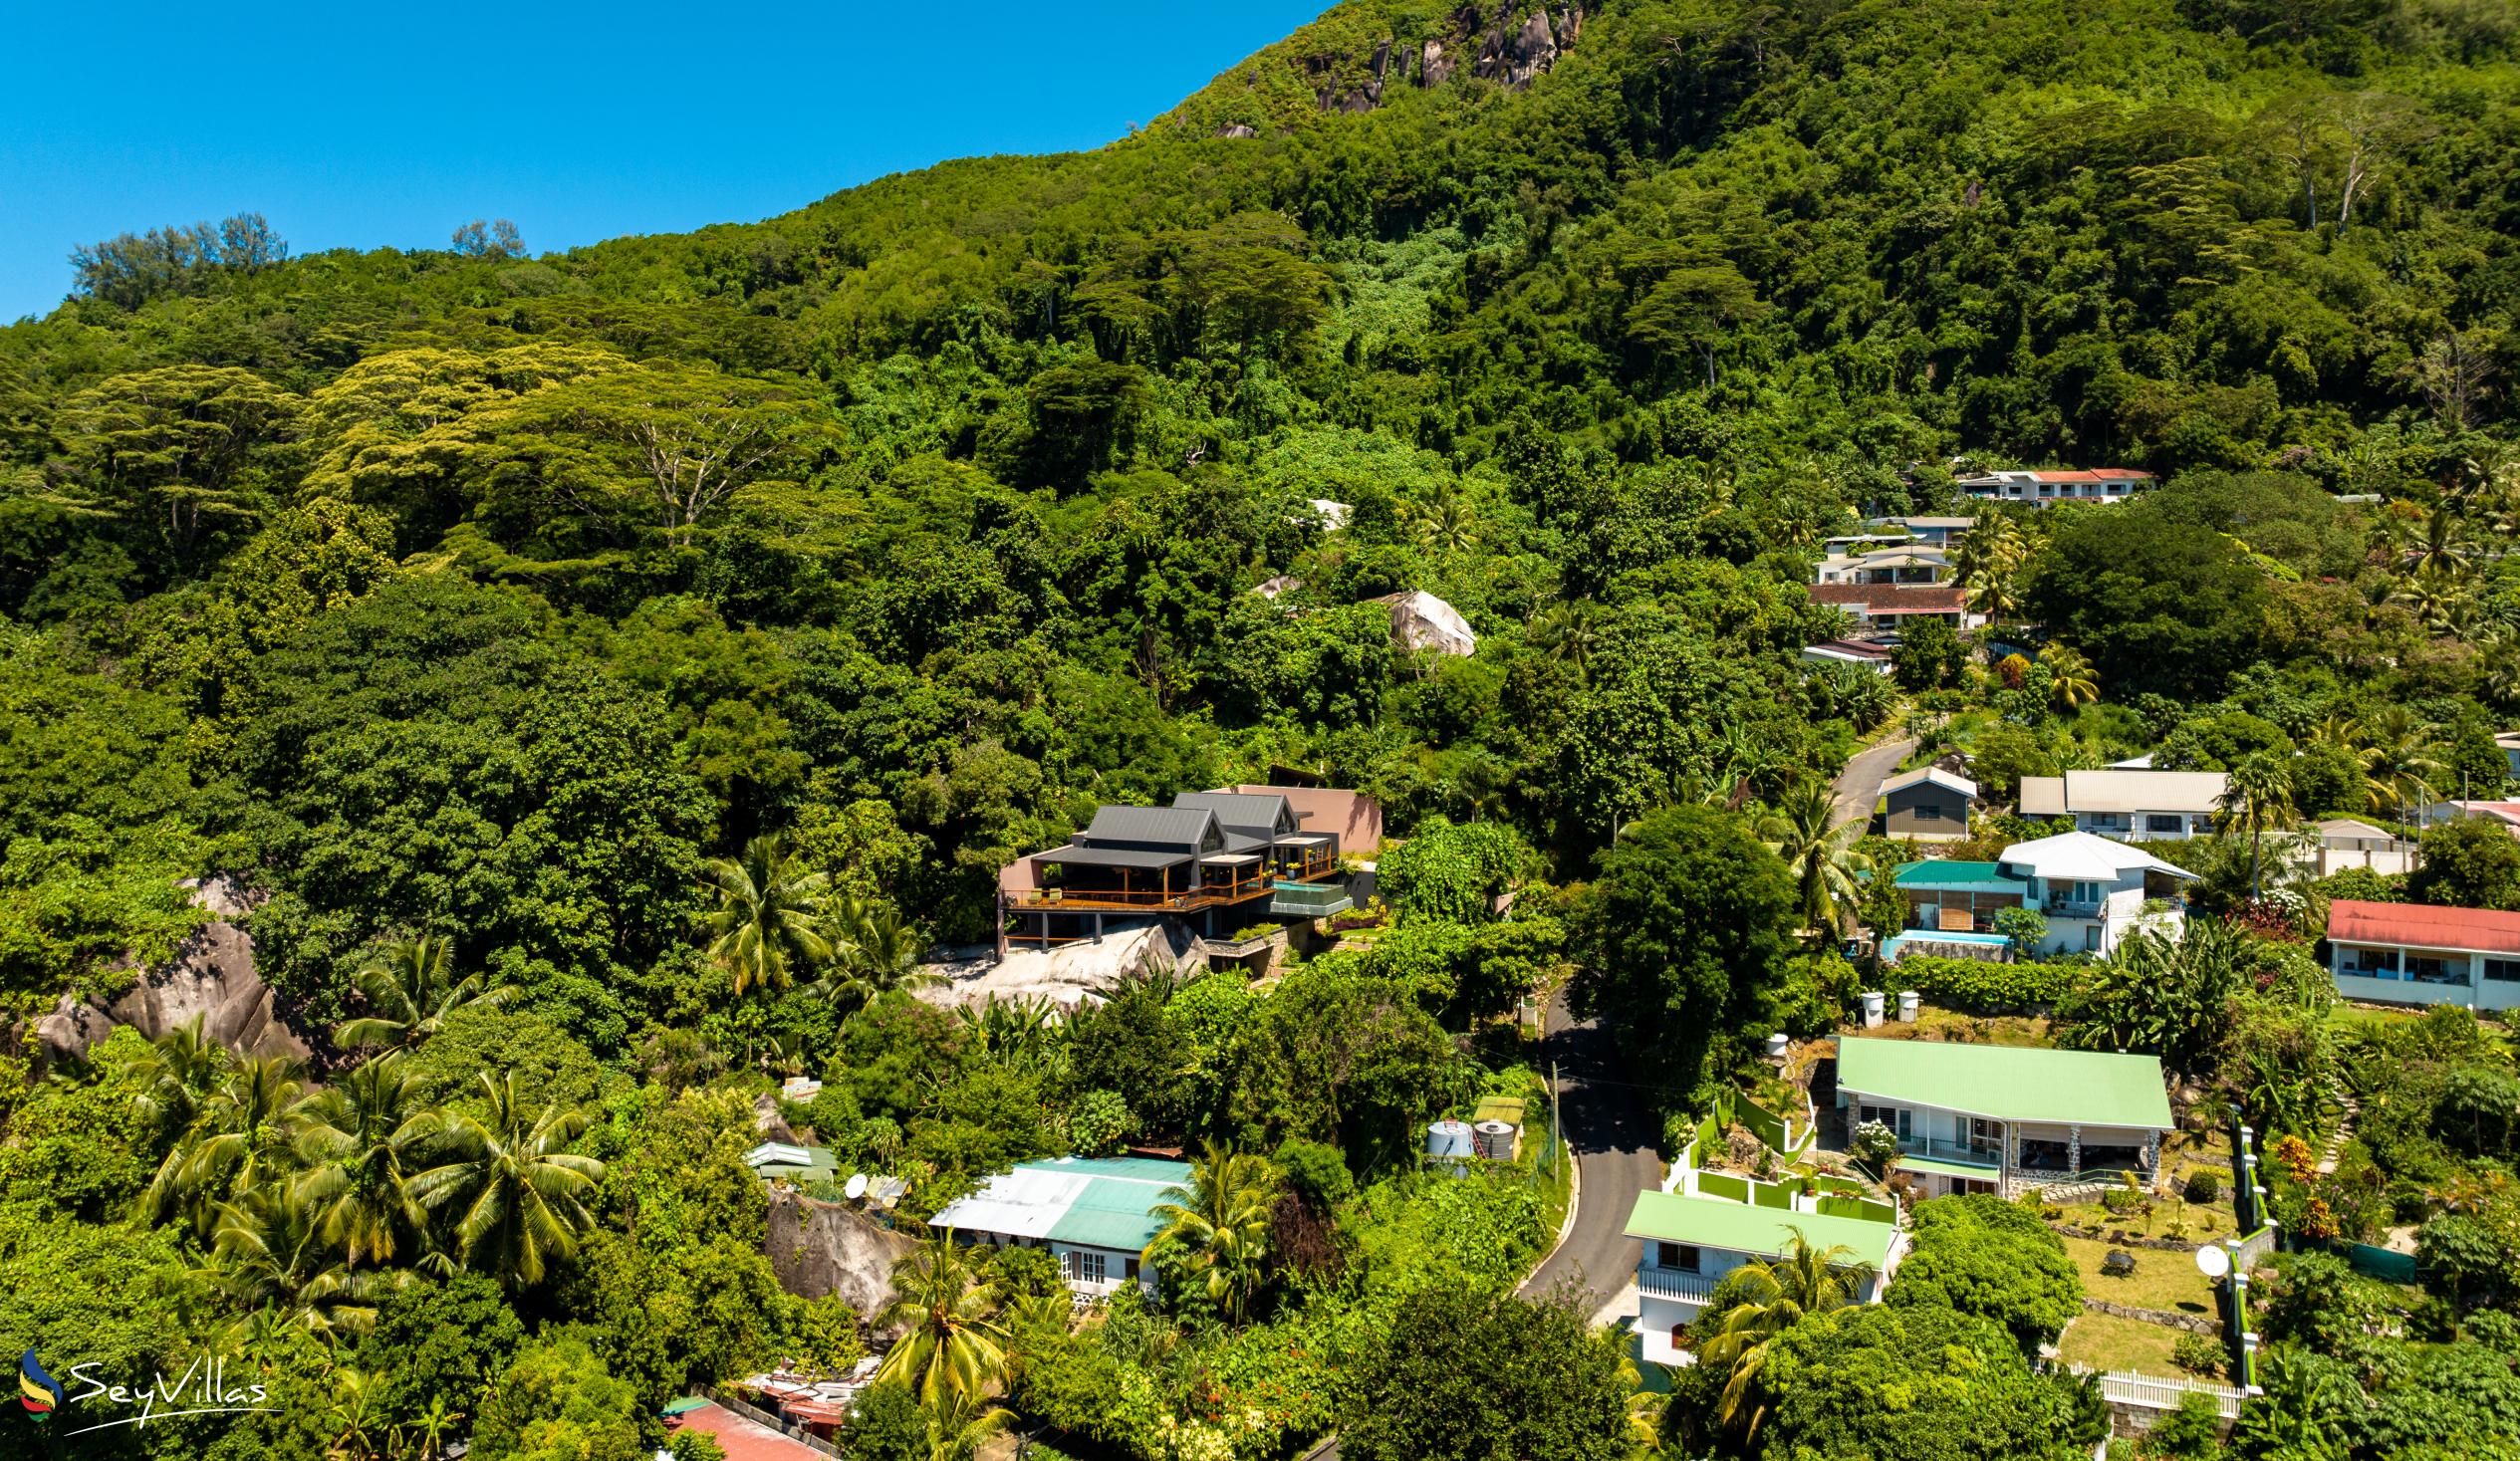 Photo 60: Maison Gaia - Location - Mahé (Seychelles)